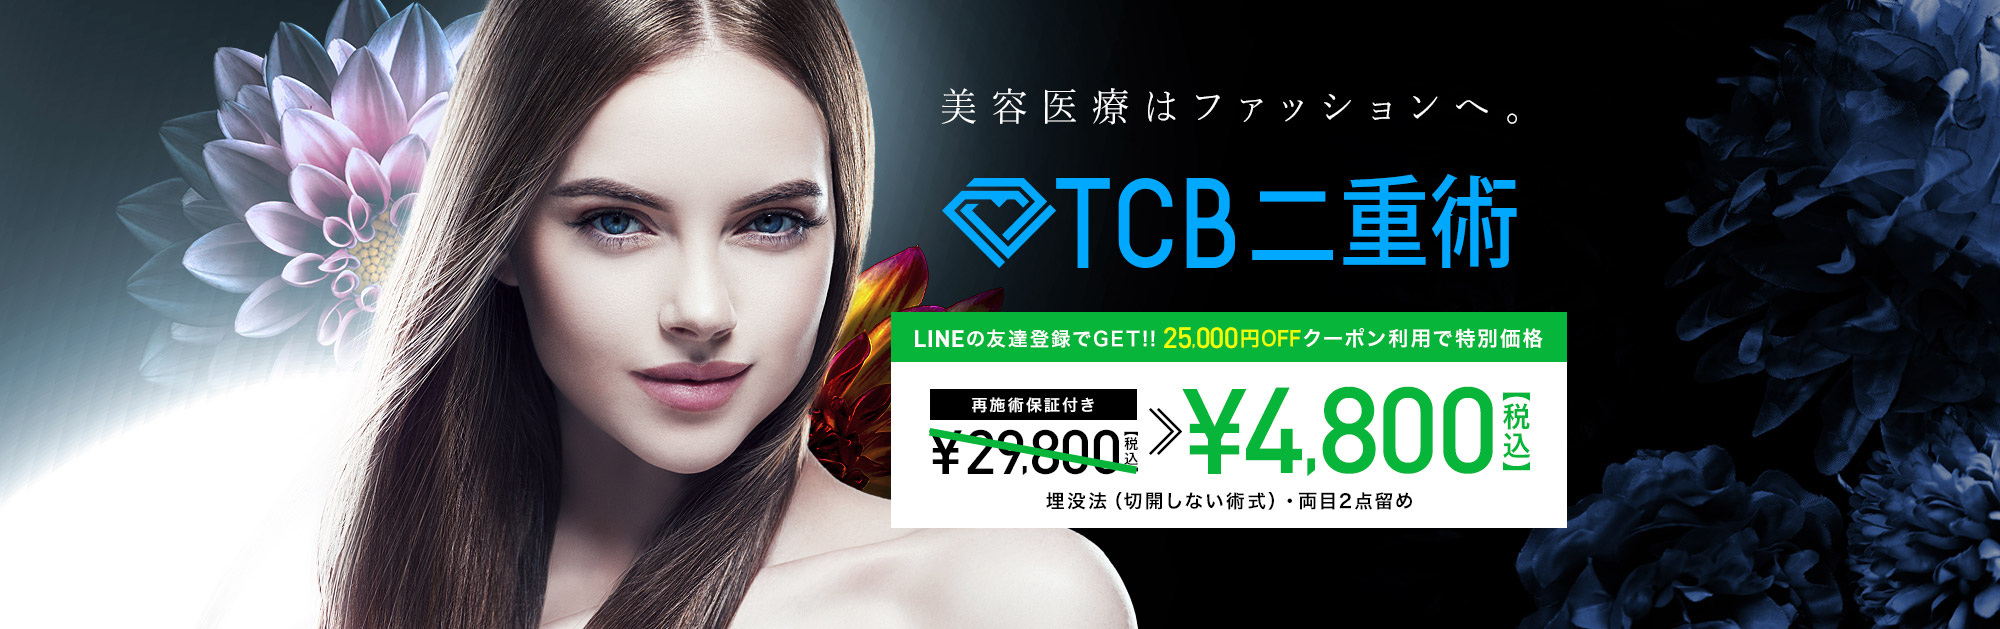 TCB二重術 LIMEの友達登録でGET!! 25,0000円OFFクーポン利用で特別価格 ￥4,800(税込)